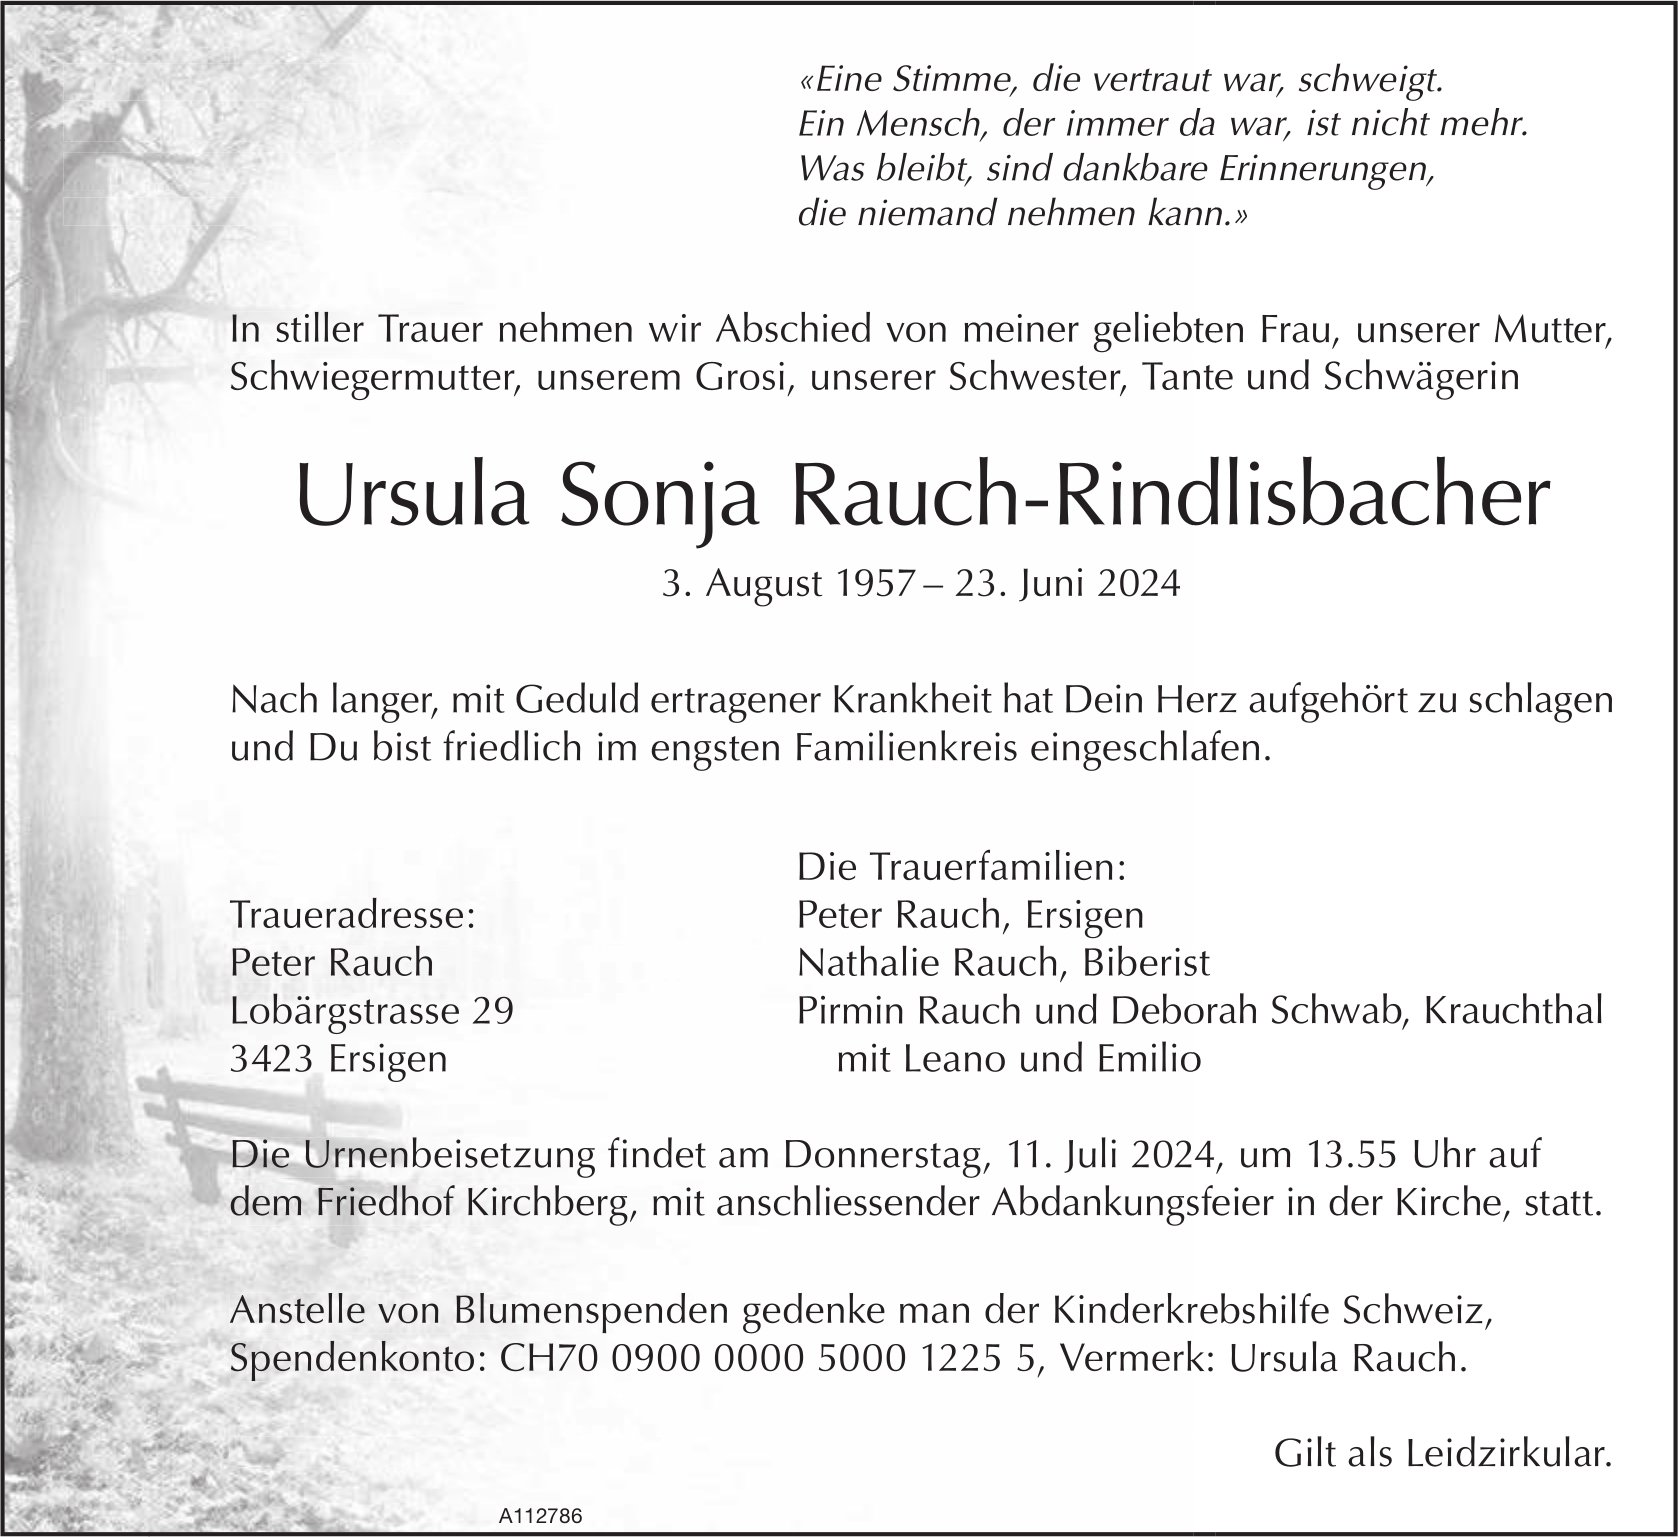 Ursula Sonja Rauch-Rindlisbacher, Juni 2024 / TA